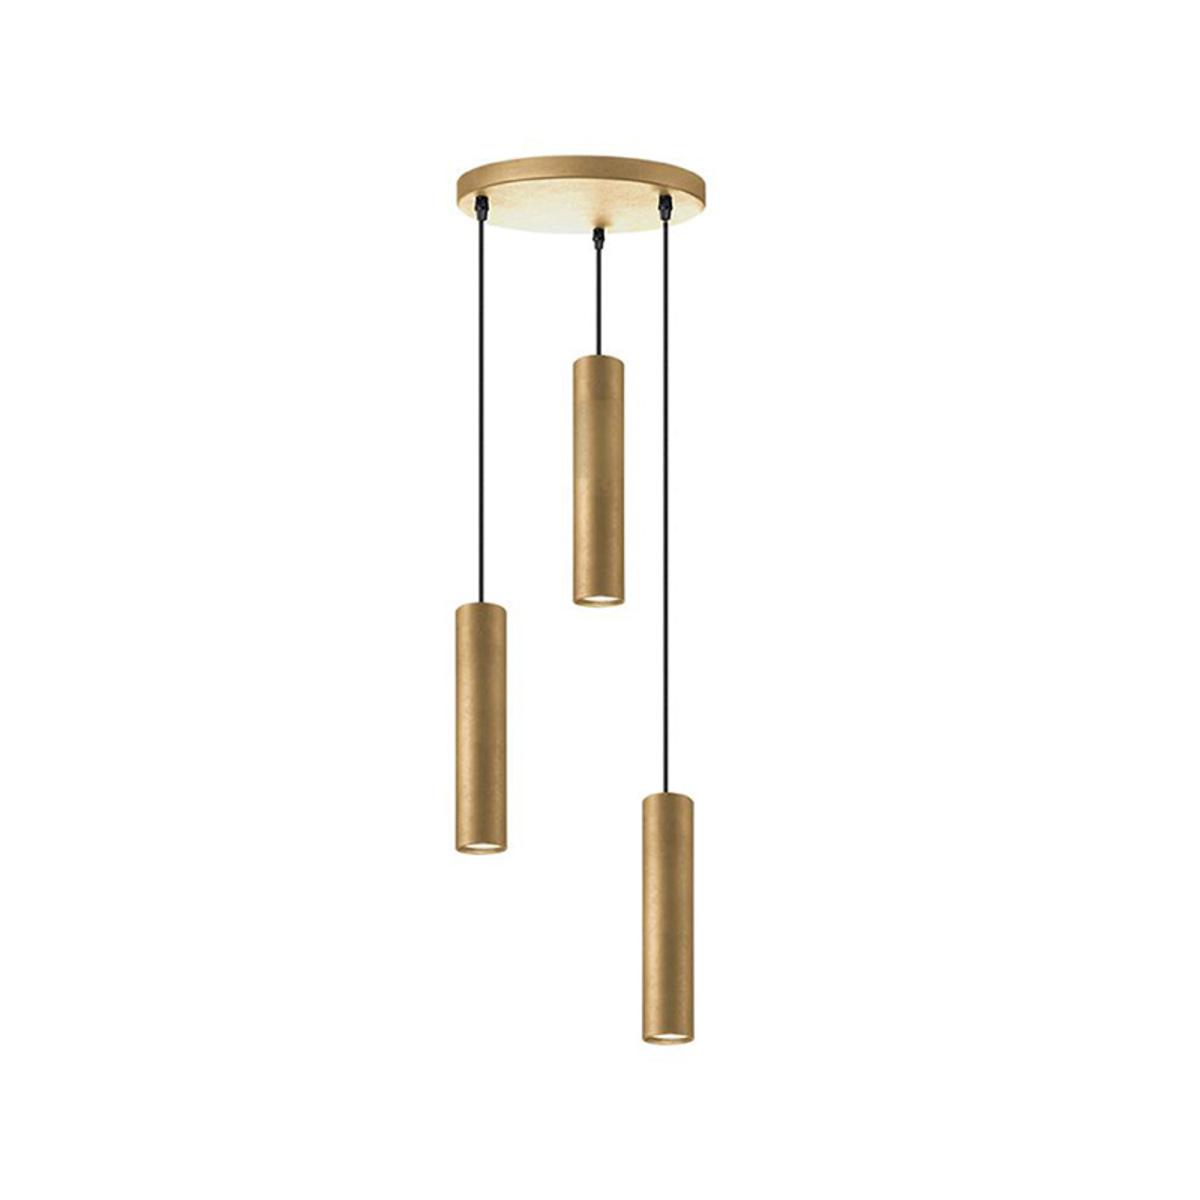  Hanglamp Ferroli - Antiek goud - Metaal afbeelding 1